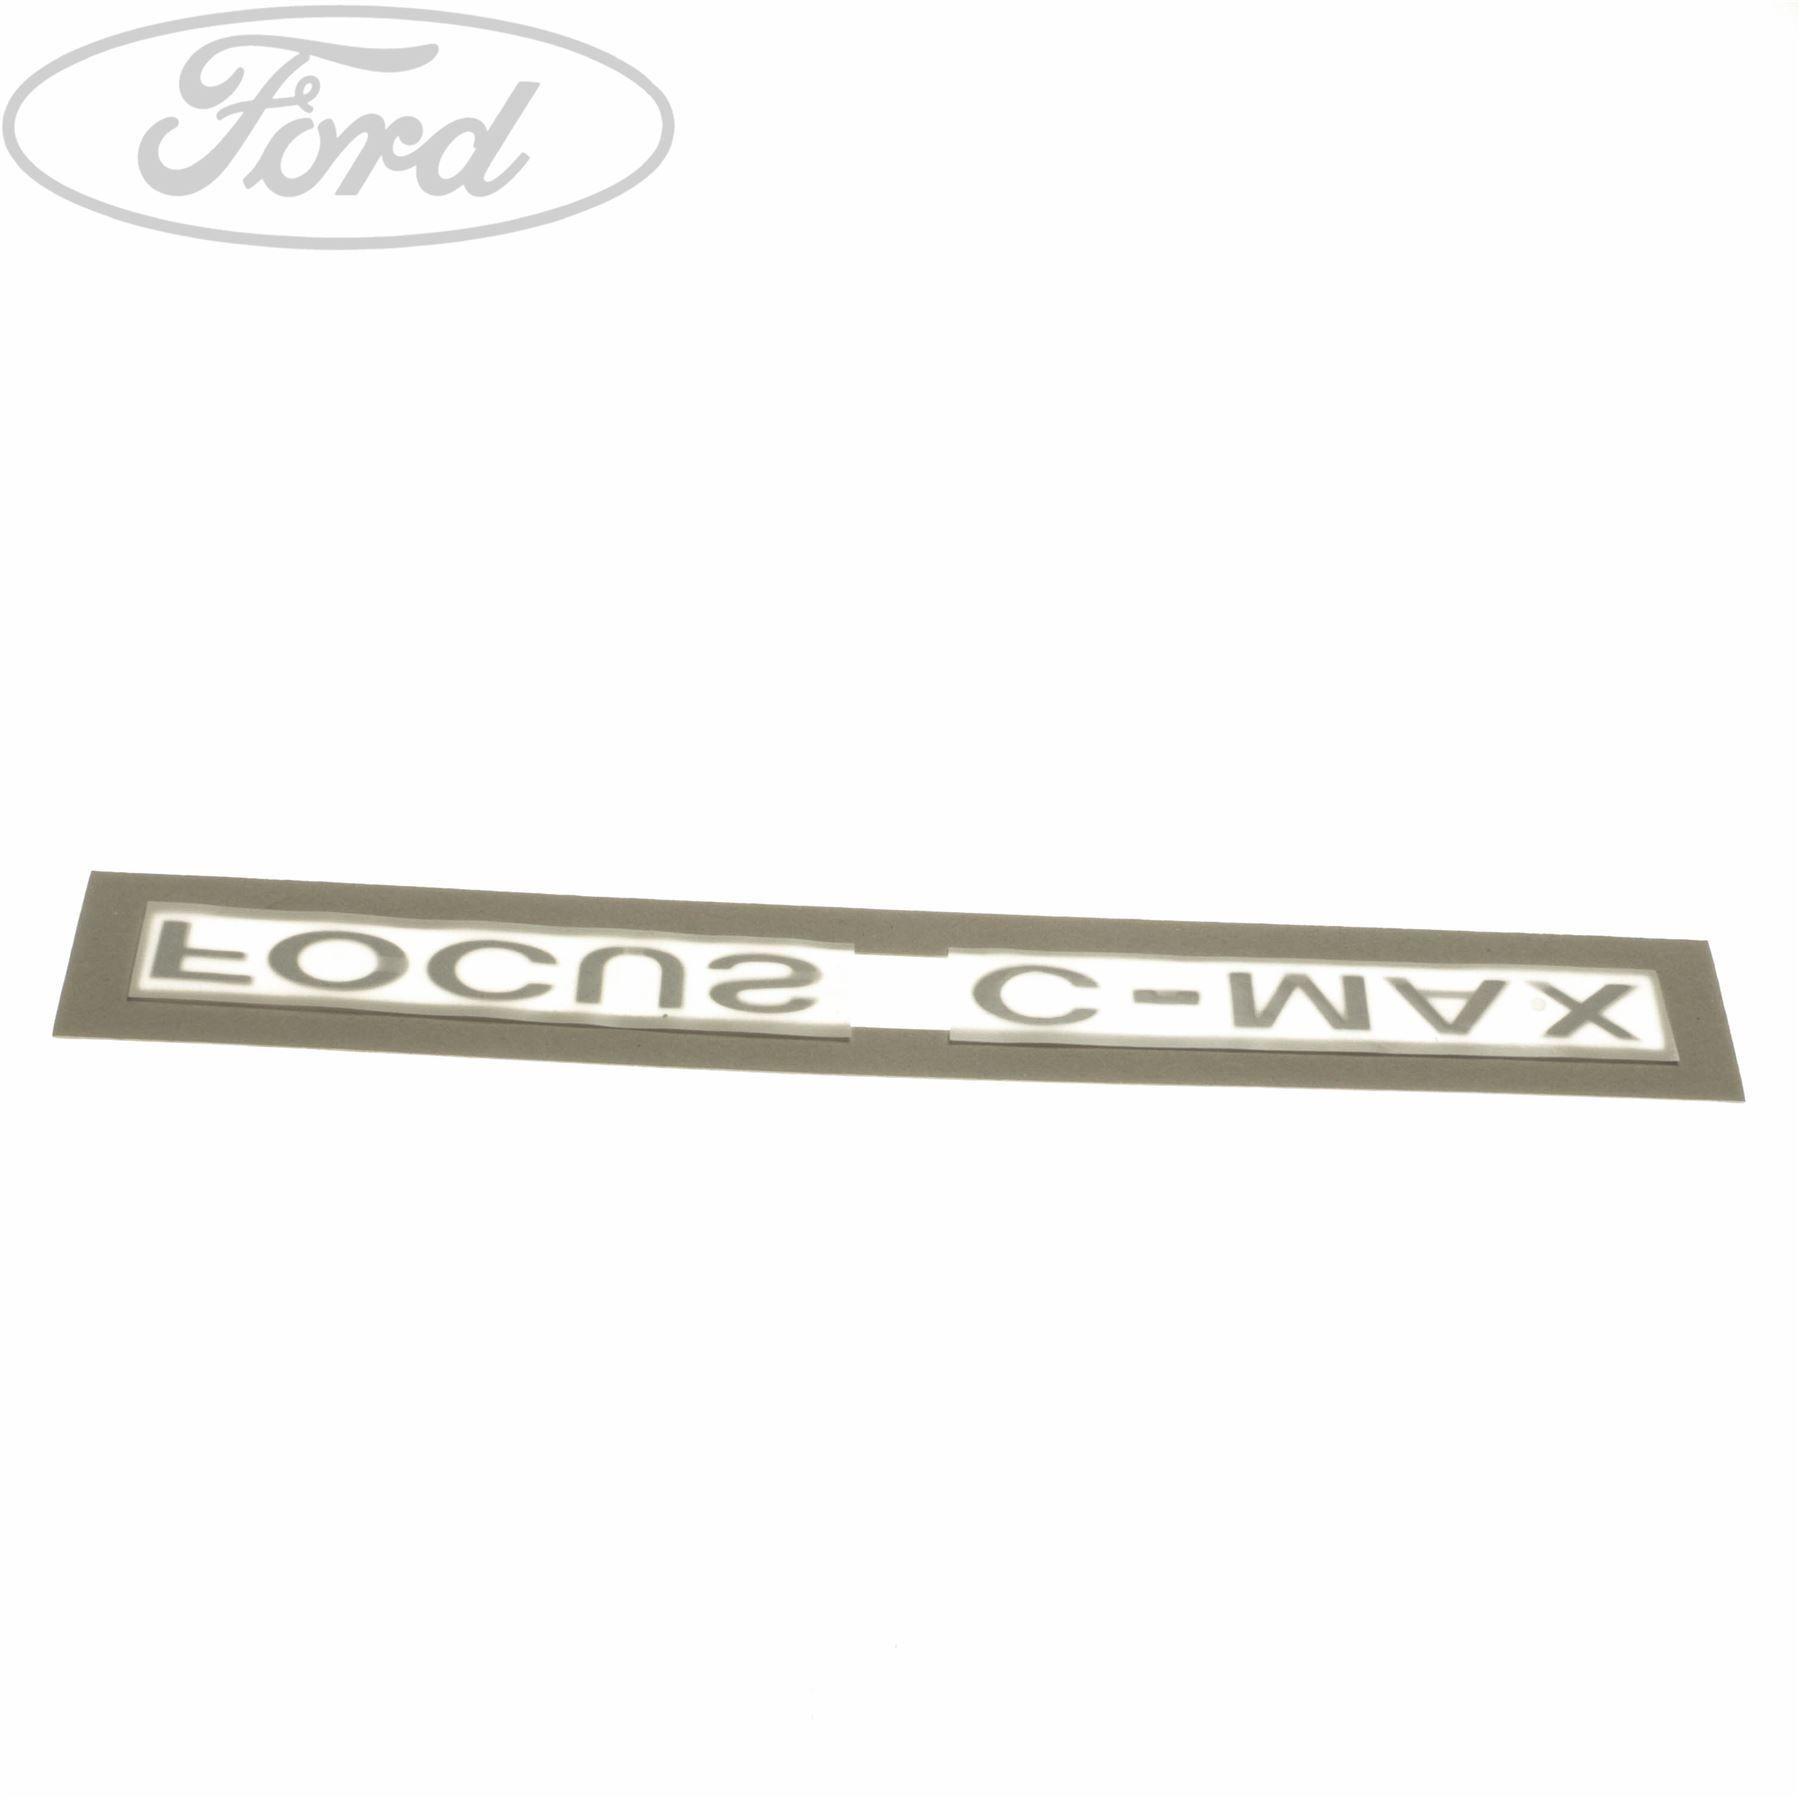 Ford C-Max Logo - Genuine Ford Focus C Max Focus Tailgate Name Plate Badge Emblem